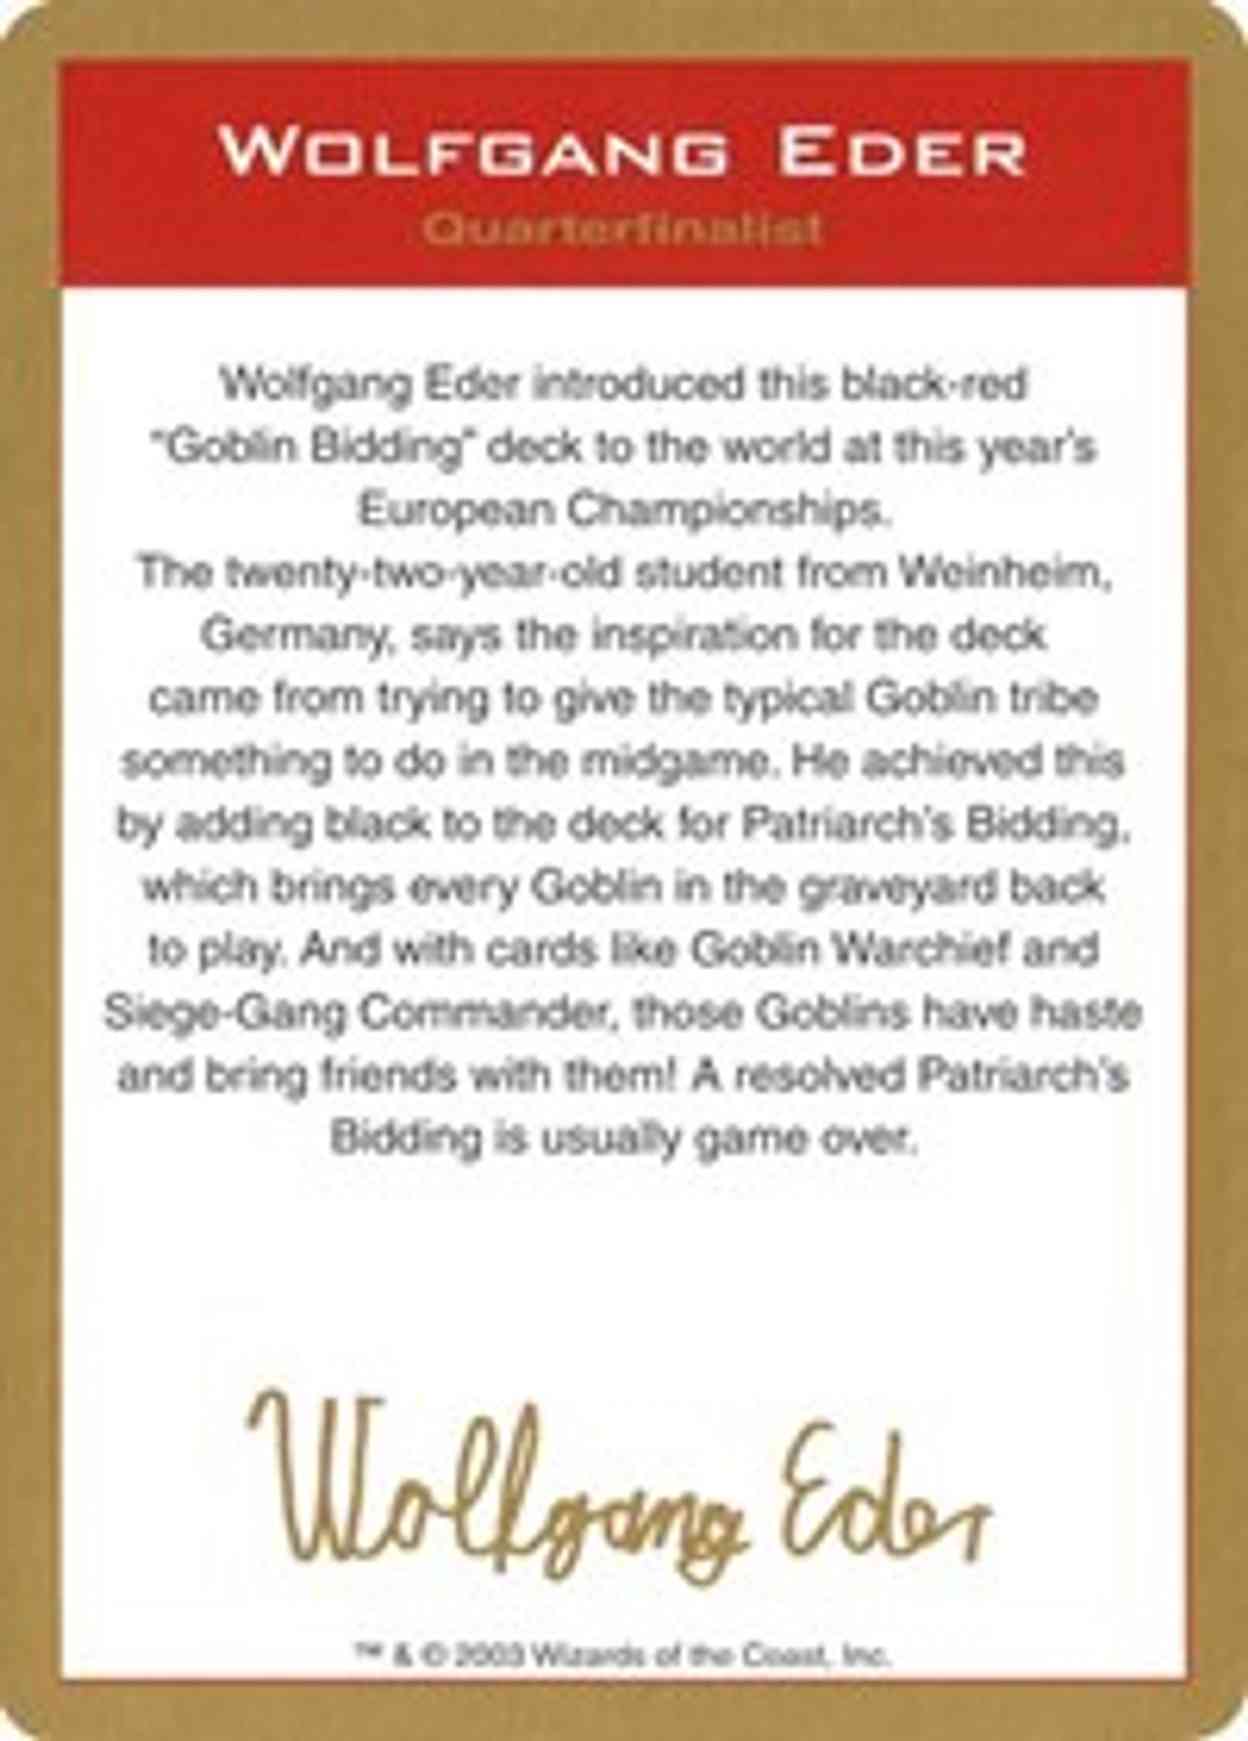 2003 Wolfgang Eder Biography Card magic card front